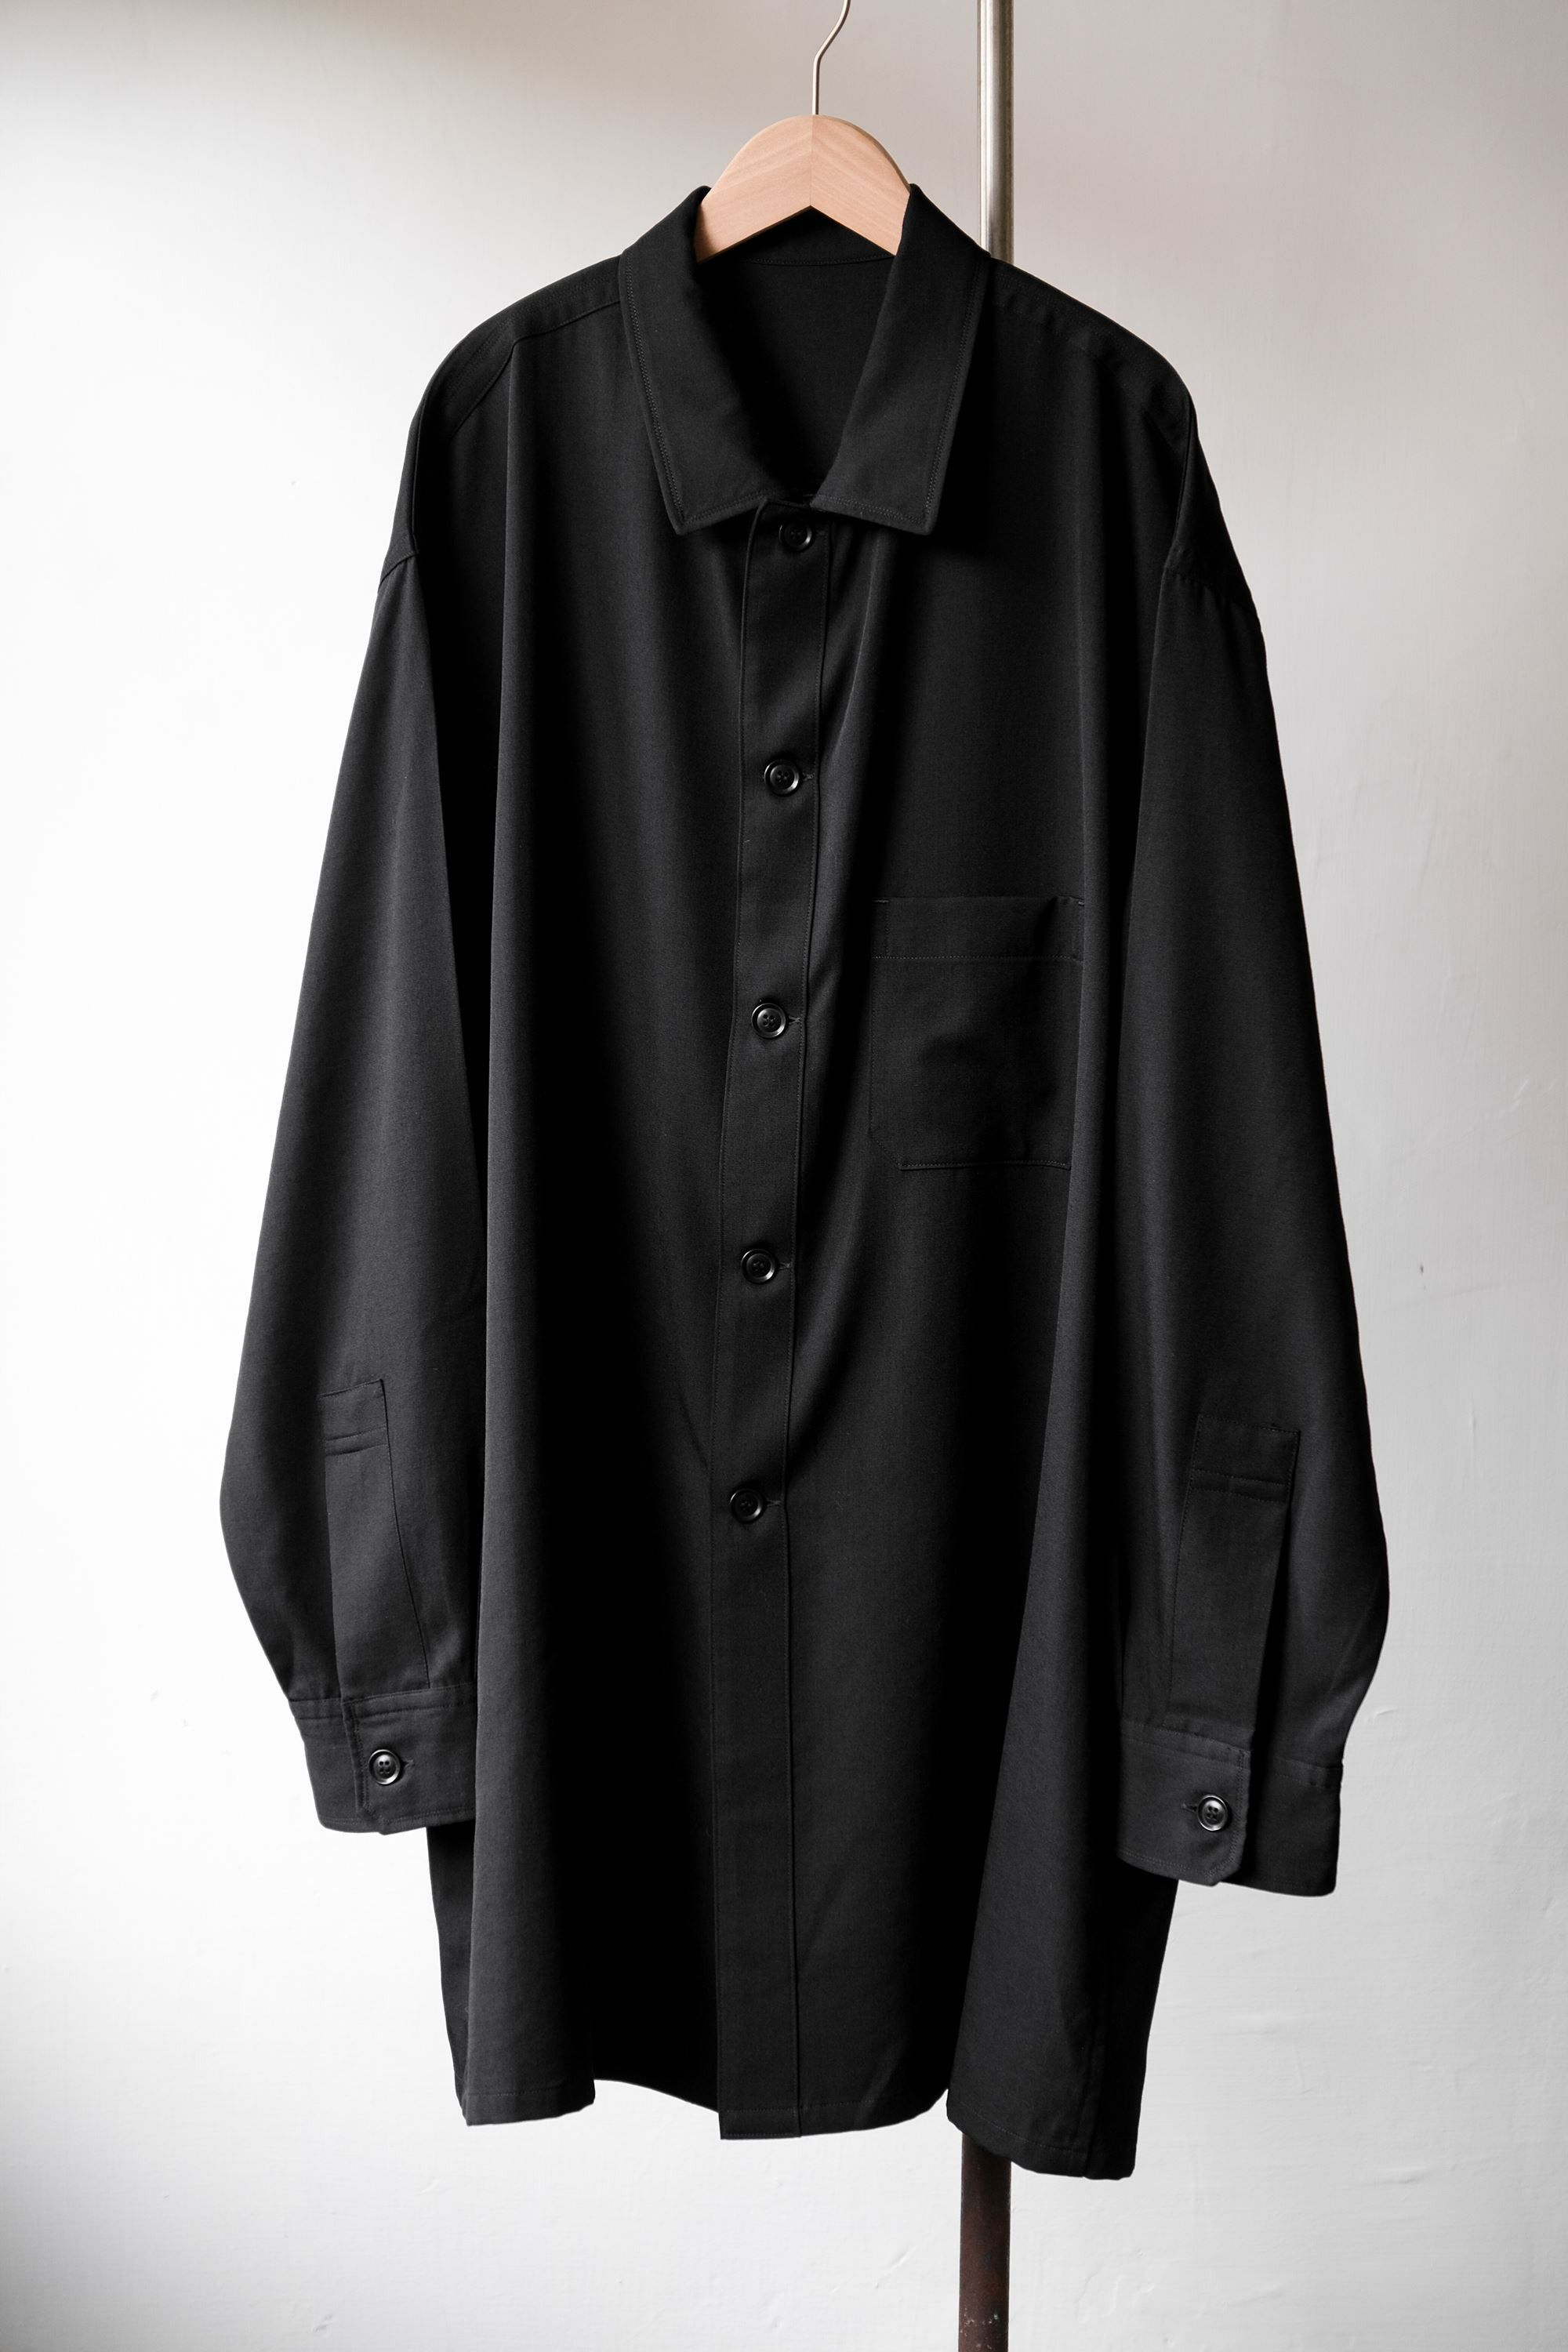 Yohji Yamamoto Yohji Yamamoto Pour Homme 16S/S Long Shirt Jacket | Grailed